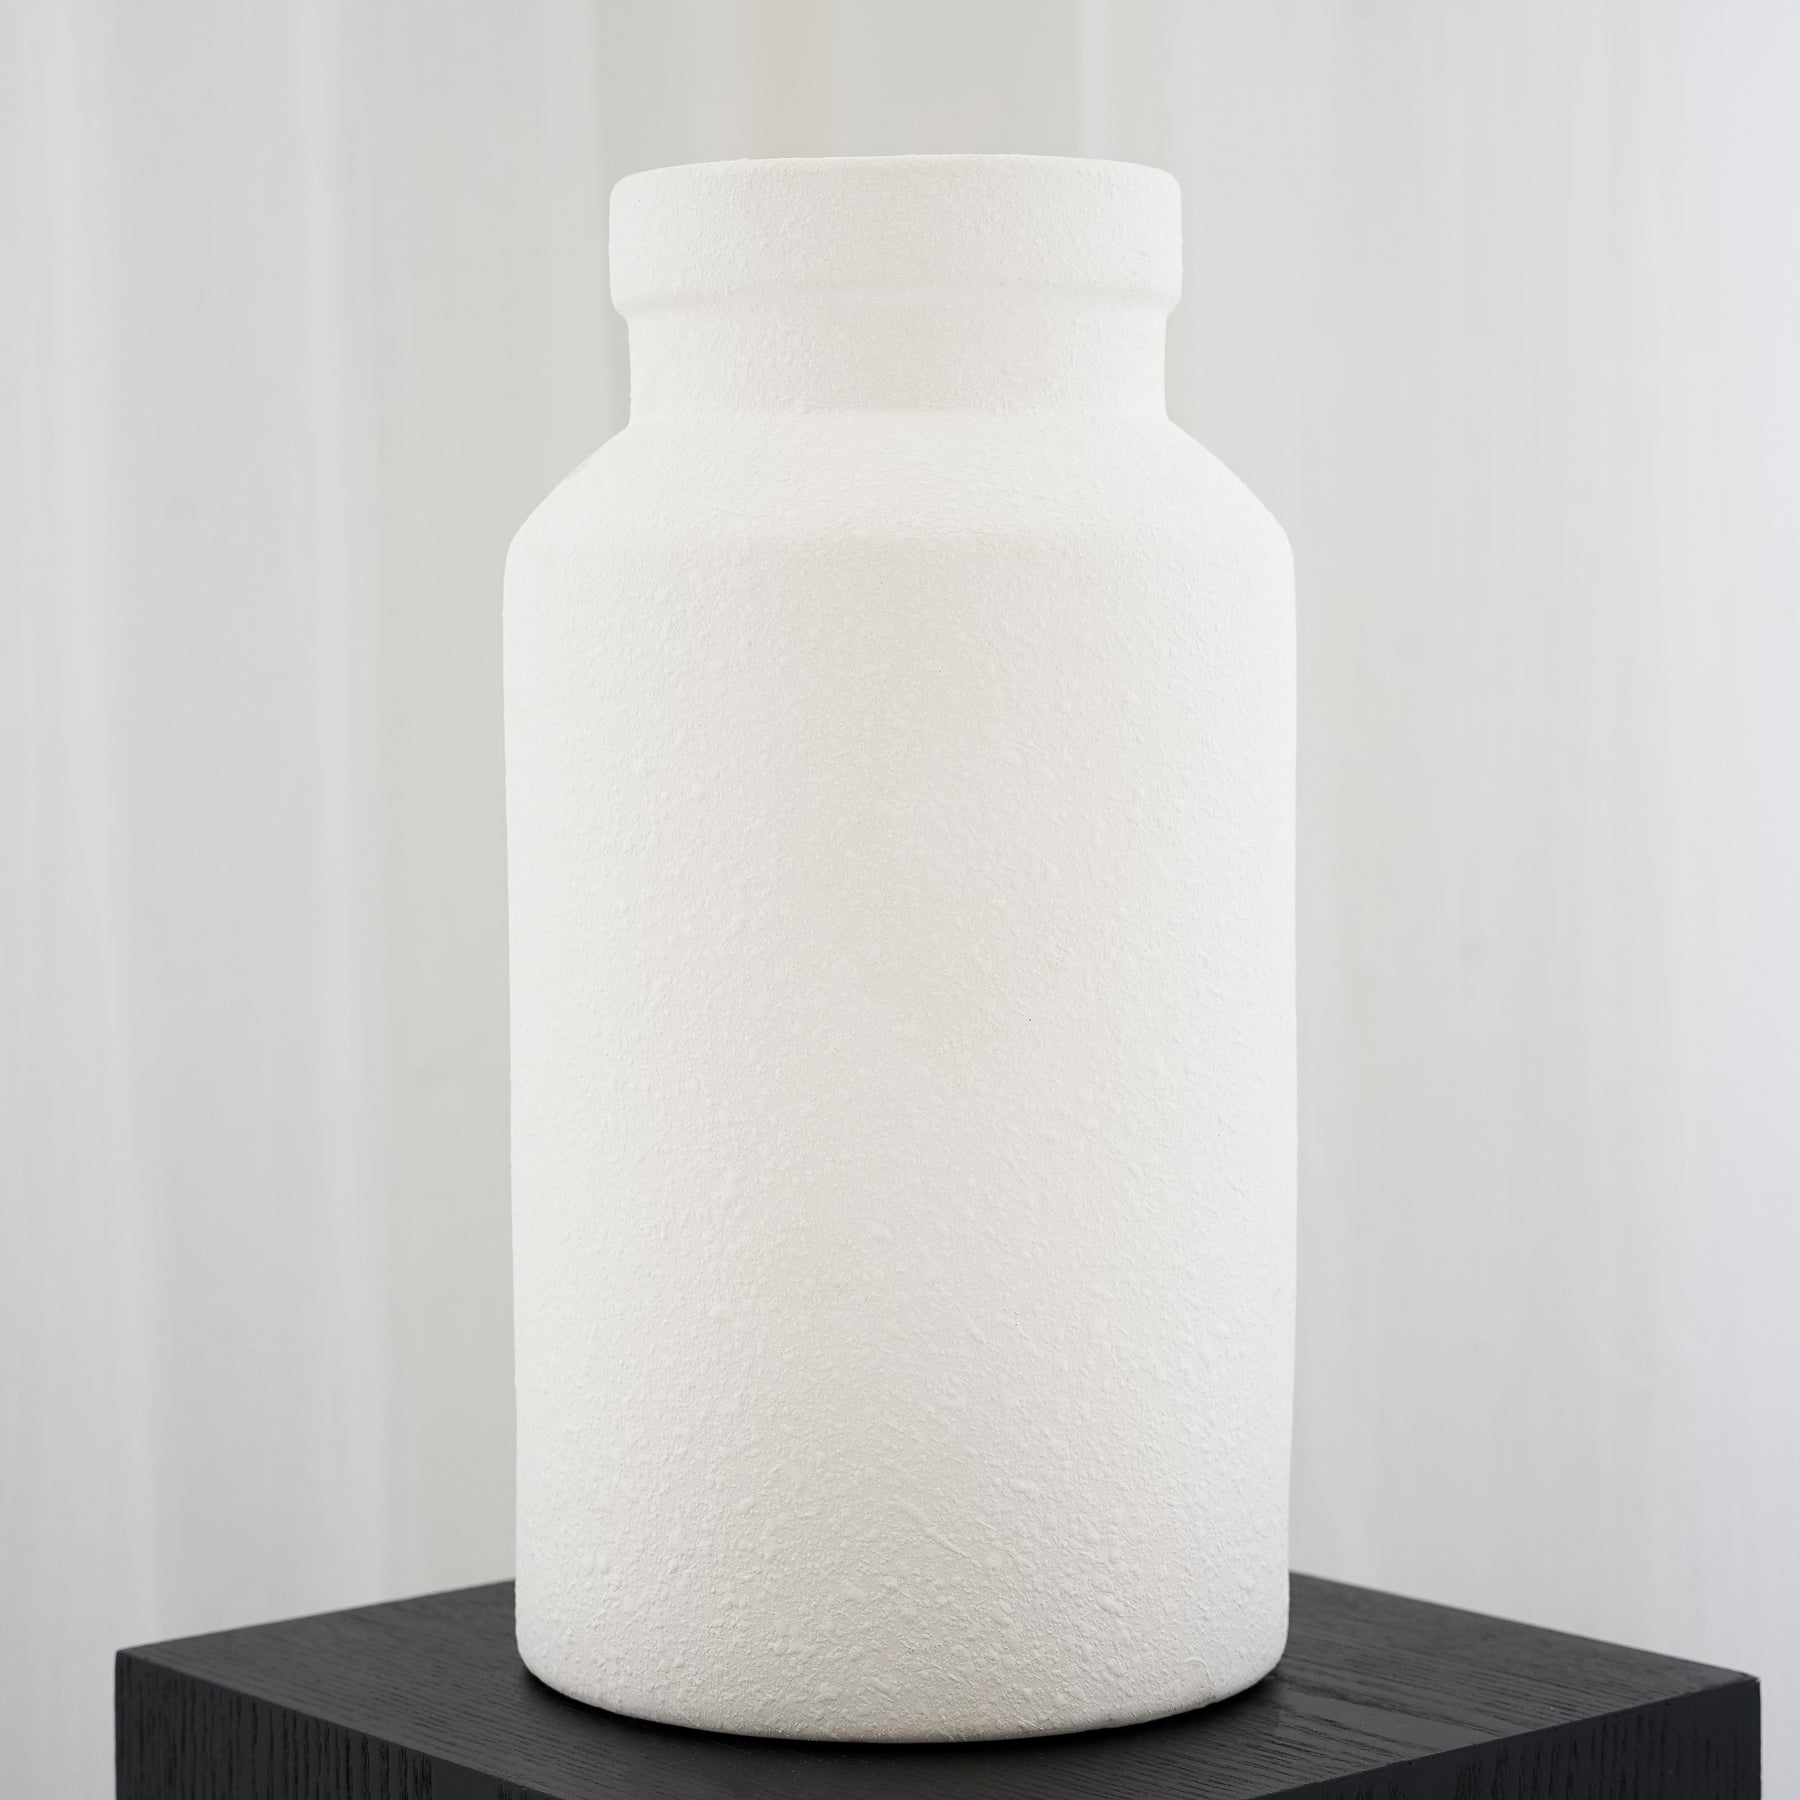 White textured ceramic small vase empty